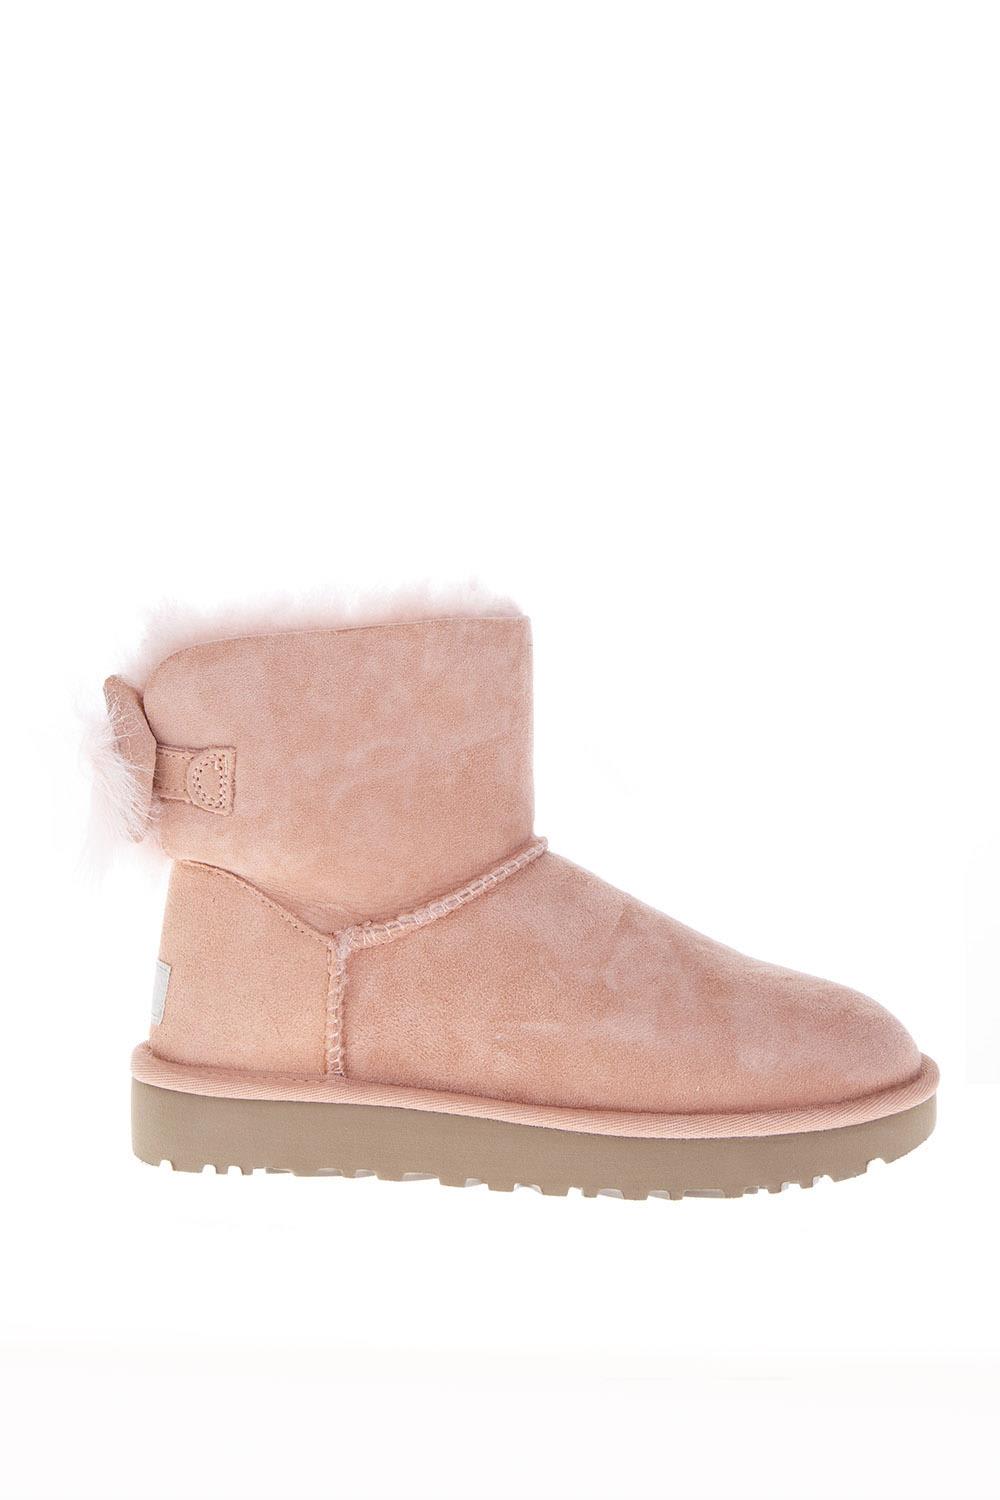 UGG Fluff Pink Mini Boots